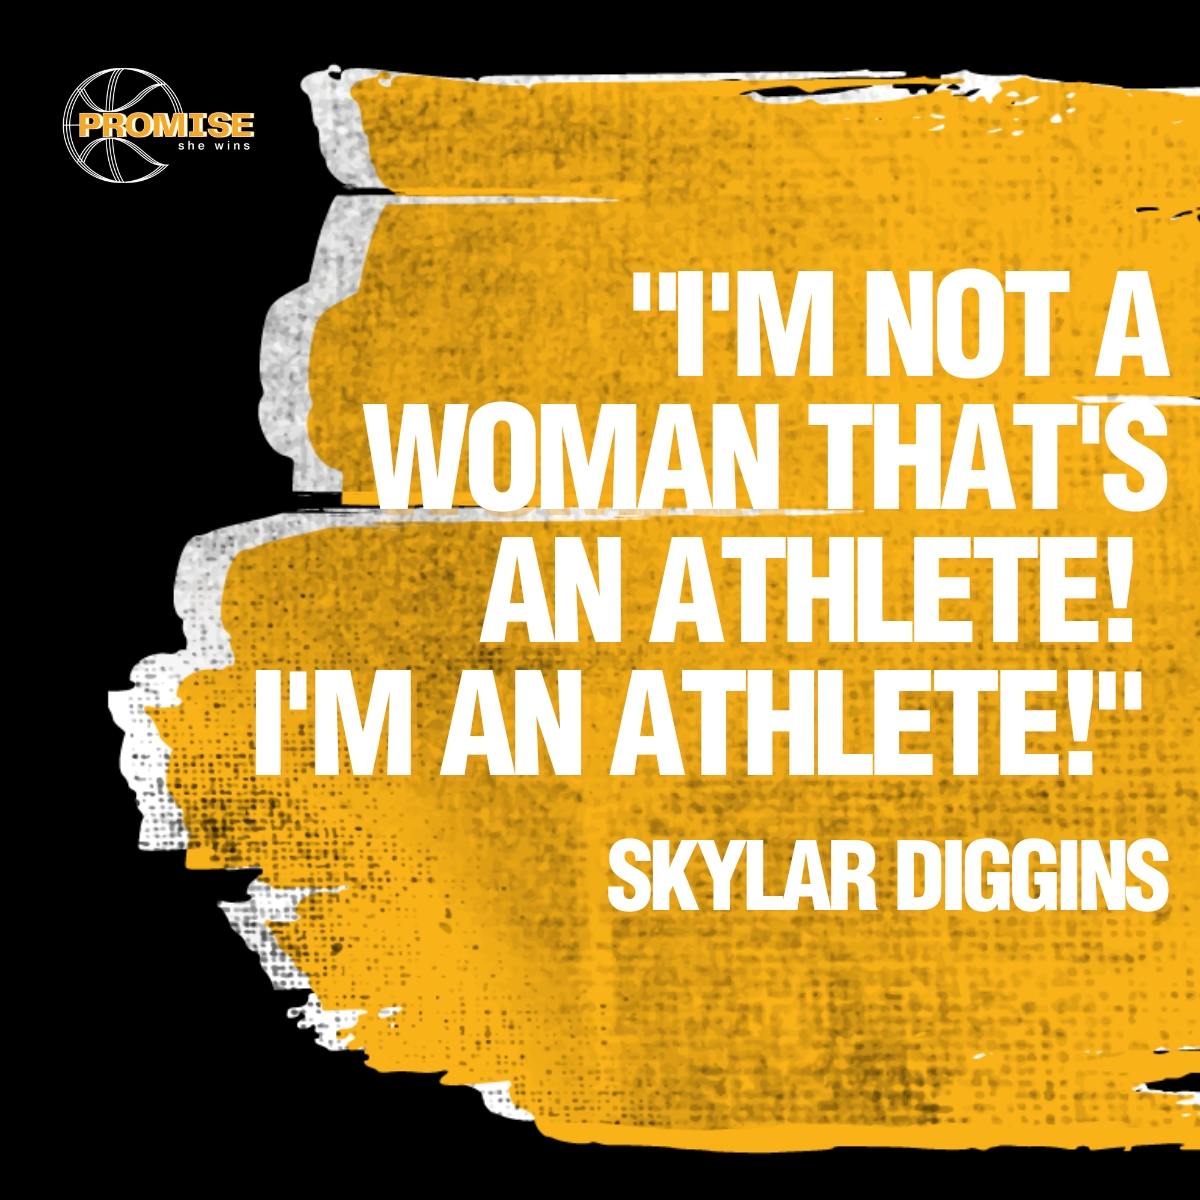 #Quoteoftheweek - 'I'm not a woman that's an athlete! I'm an athlete!' Skylar Diggins 💪

#PROMISE #SheWins #dunkthestigma #promisebasketball